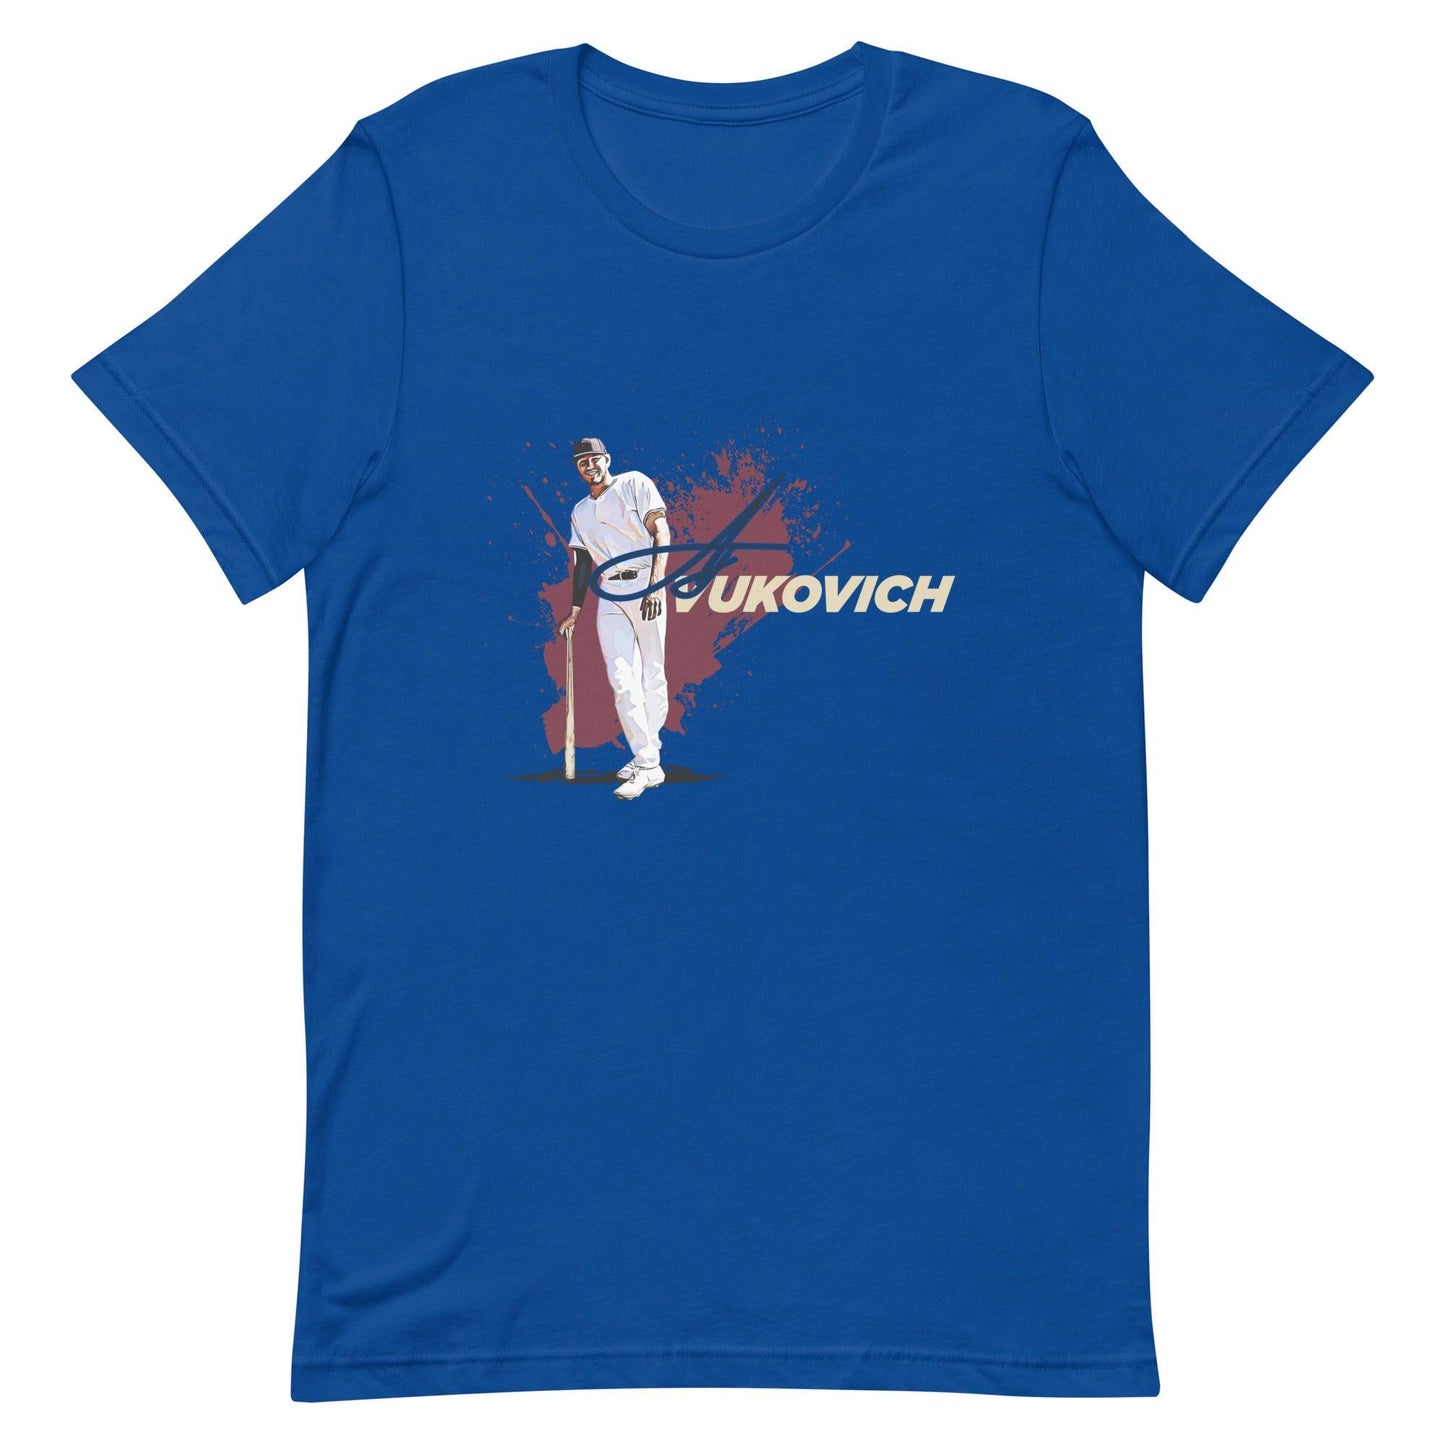 AJ Vukovich “Primetime” t-shirt - Fan Arch